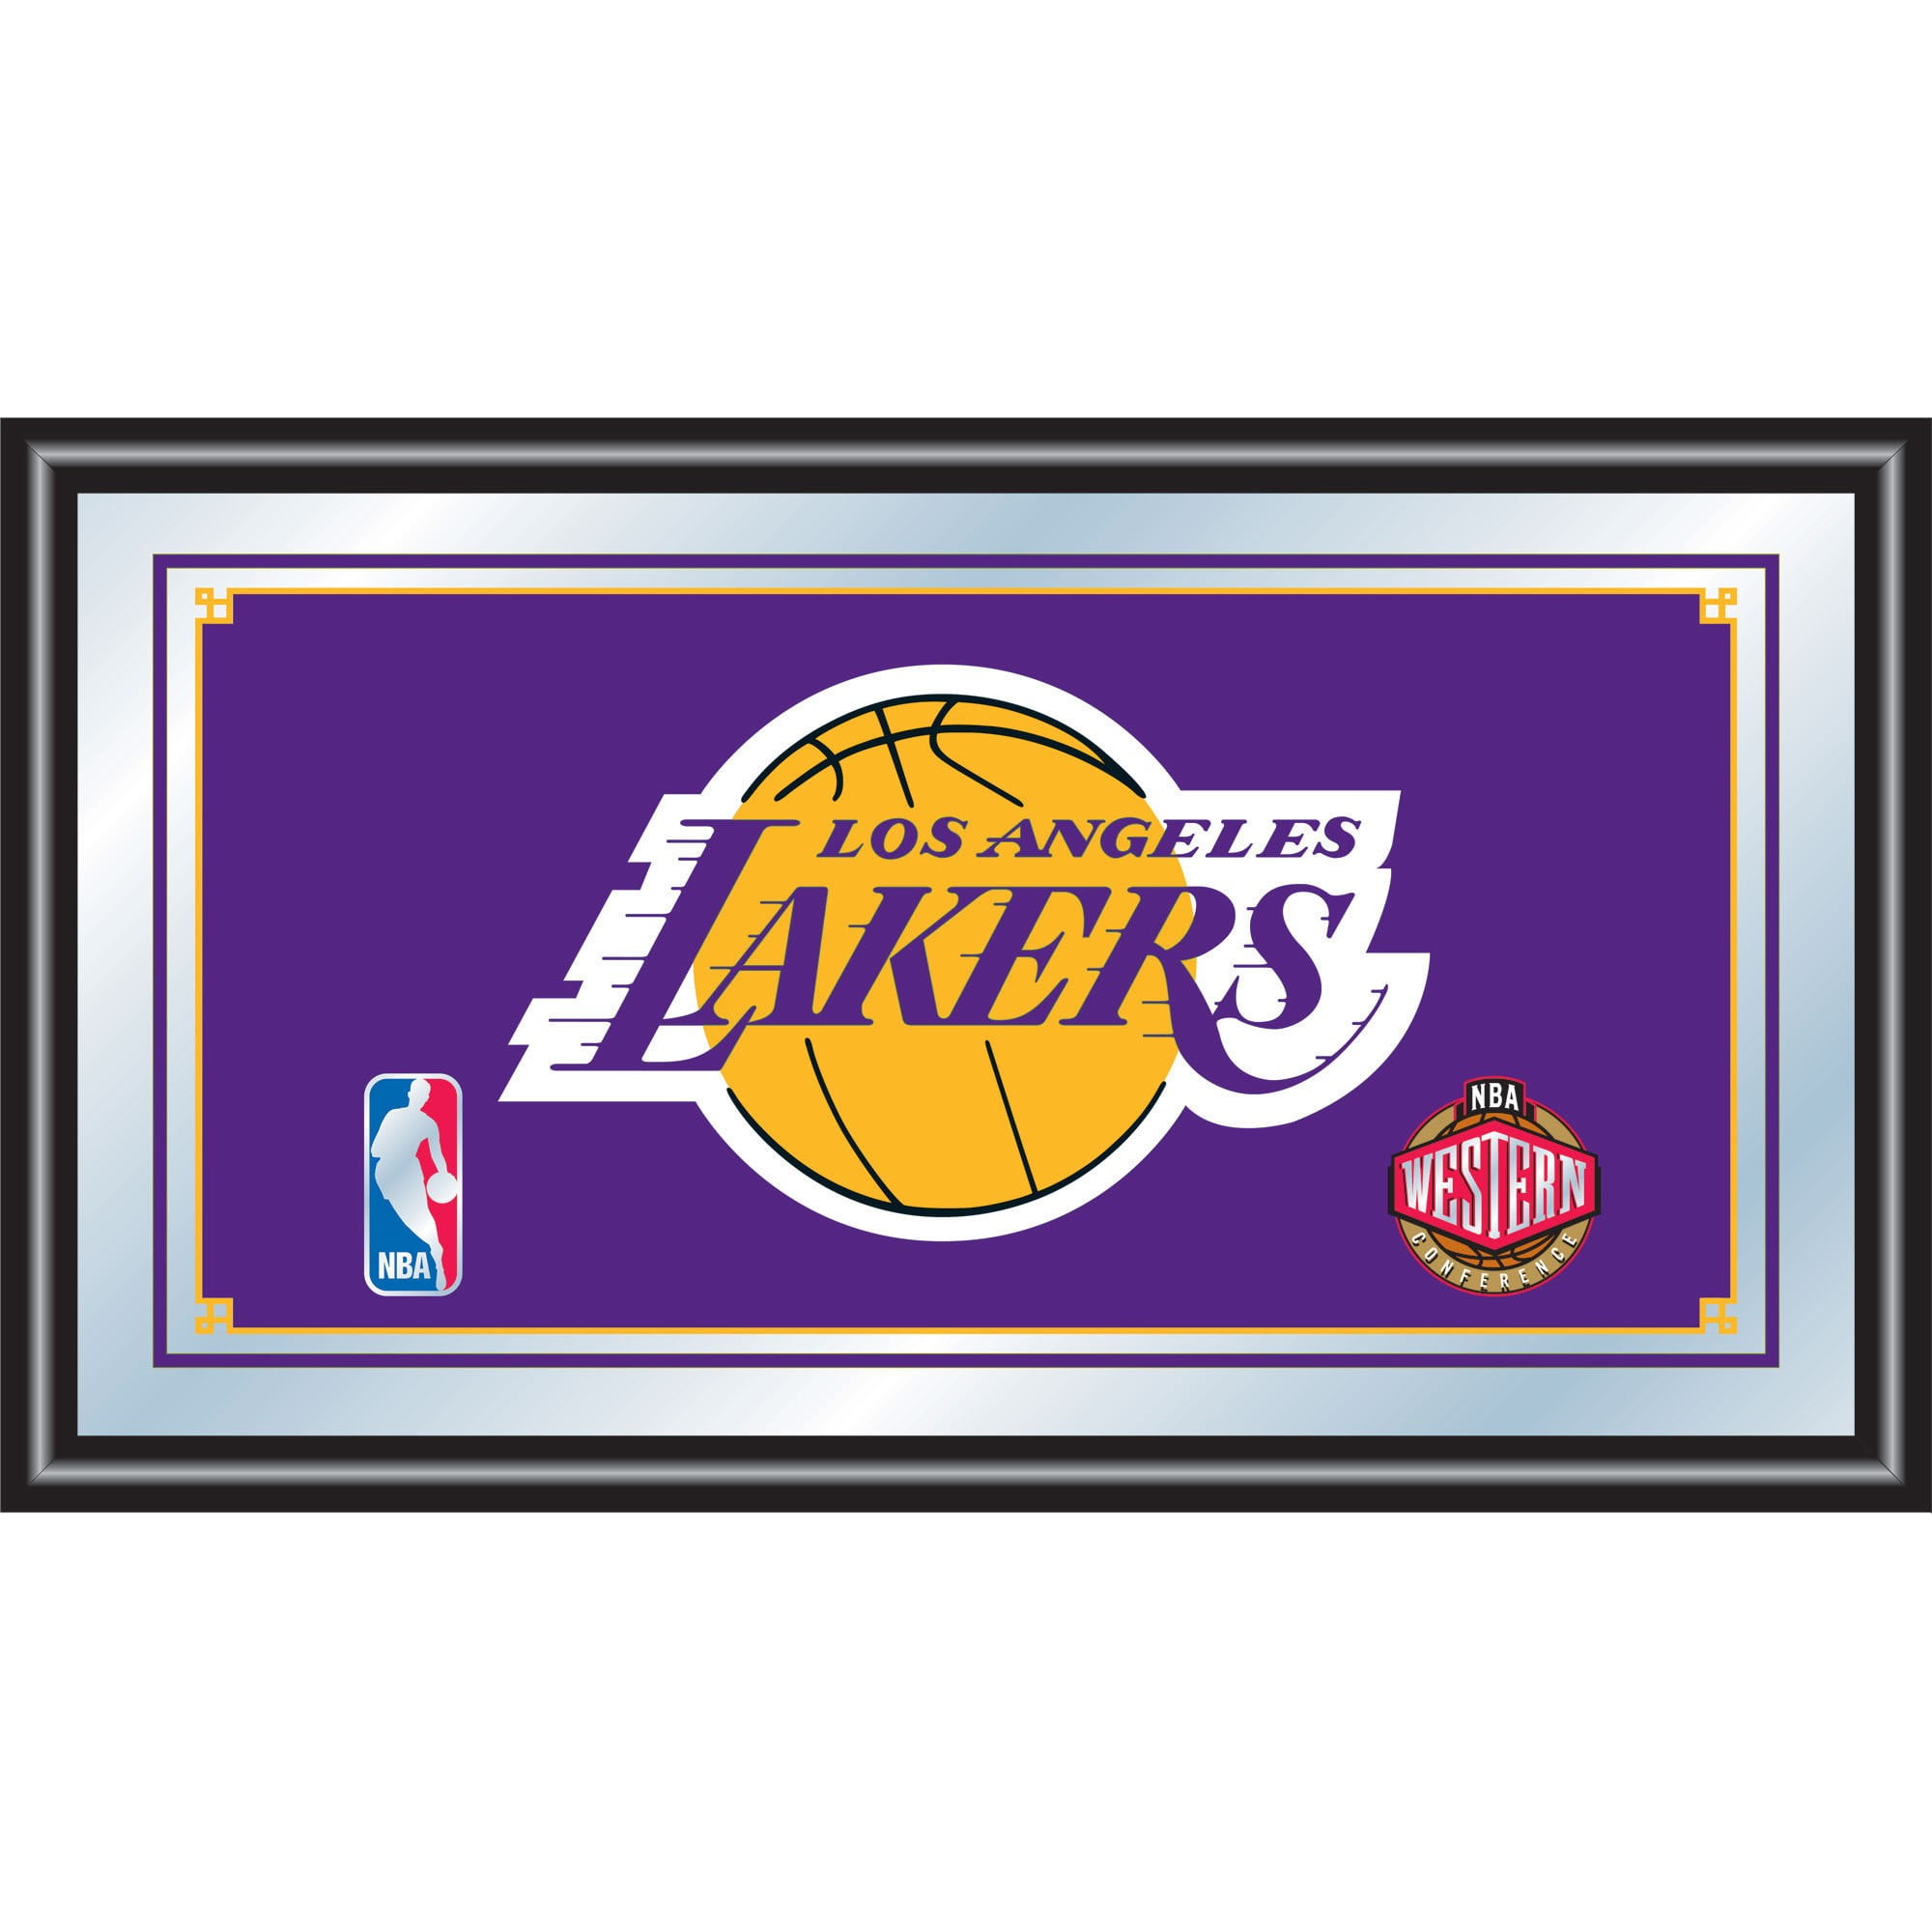 Lakers emblem  Lakers logo, Los angeles lakers, Los angeles lakers logo